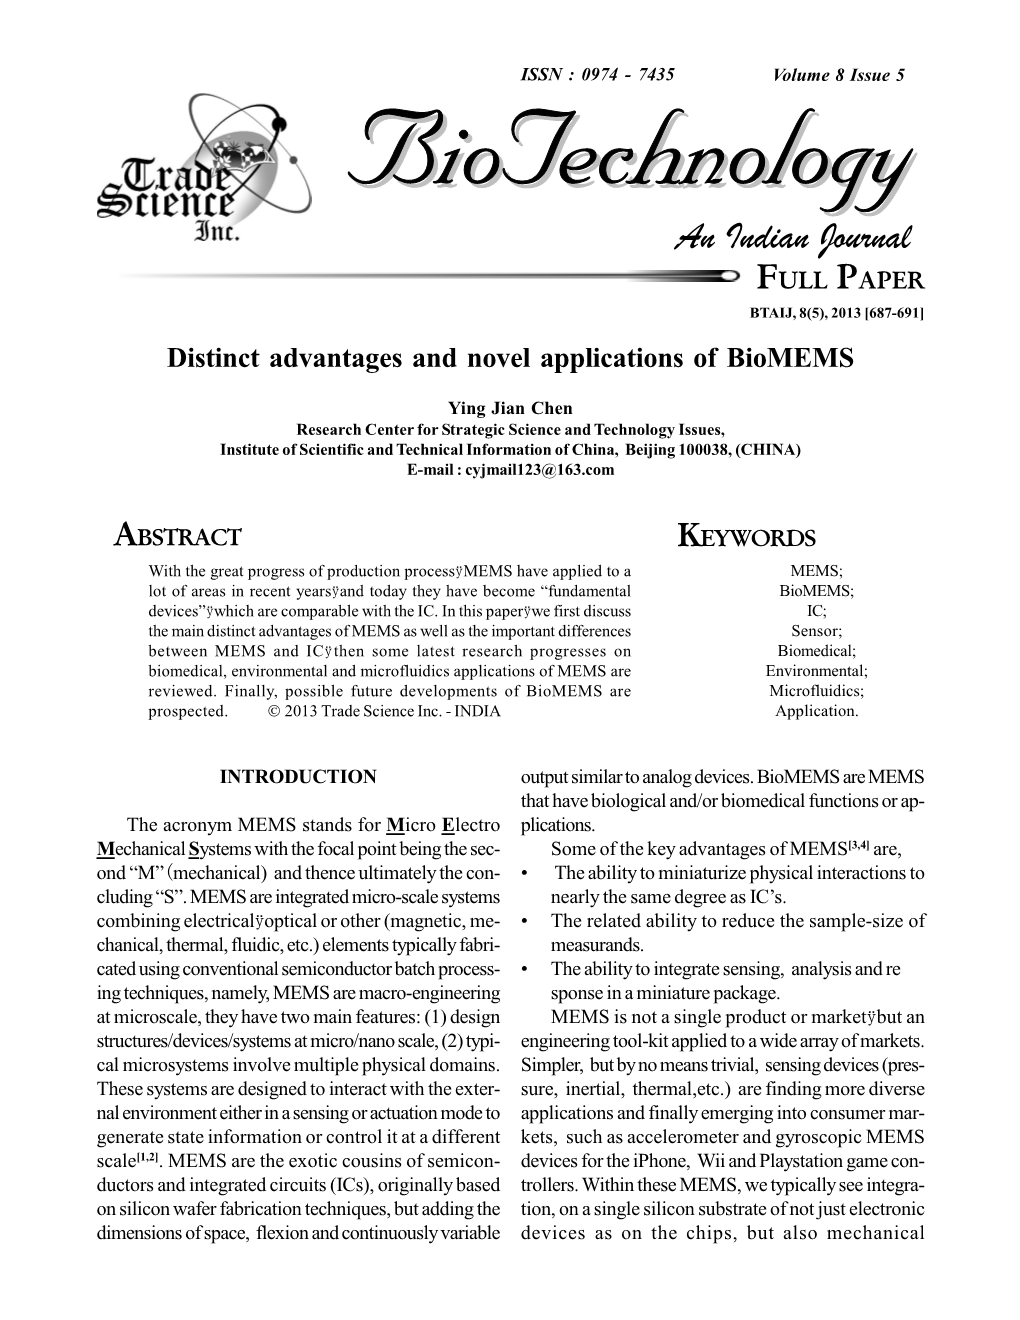 Distinct Advantages and Novel Applications of Biomems